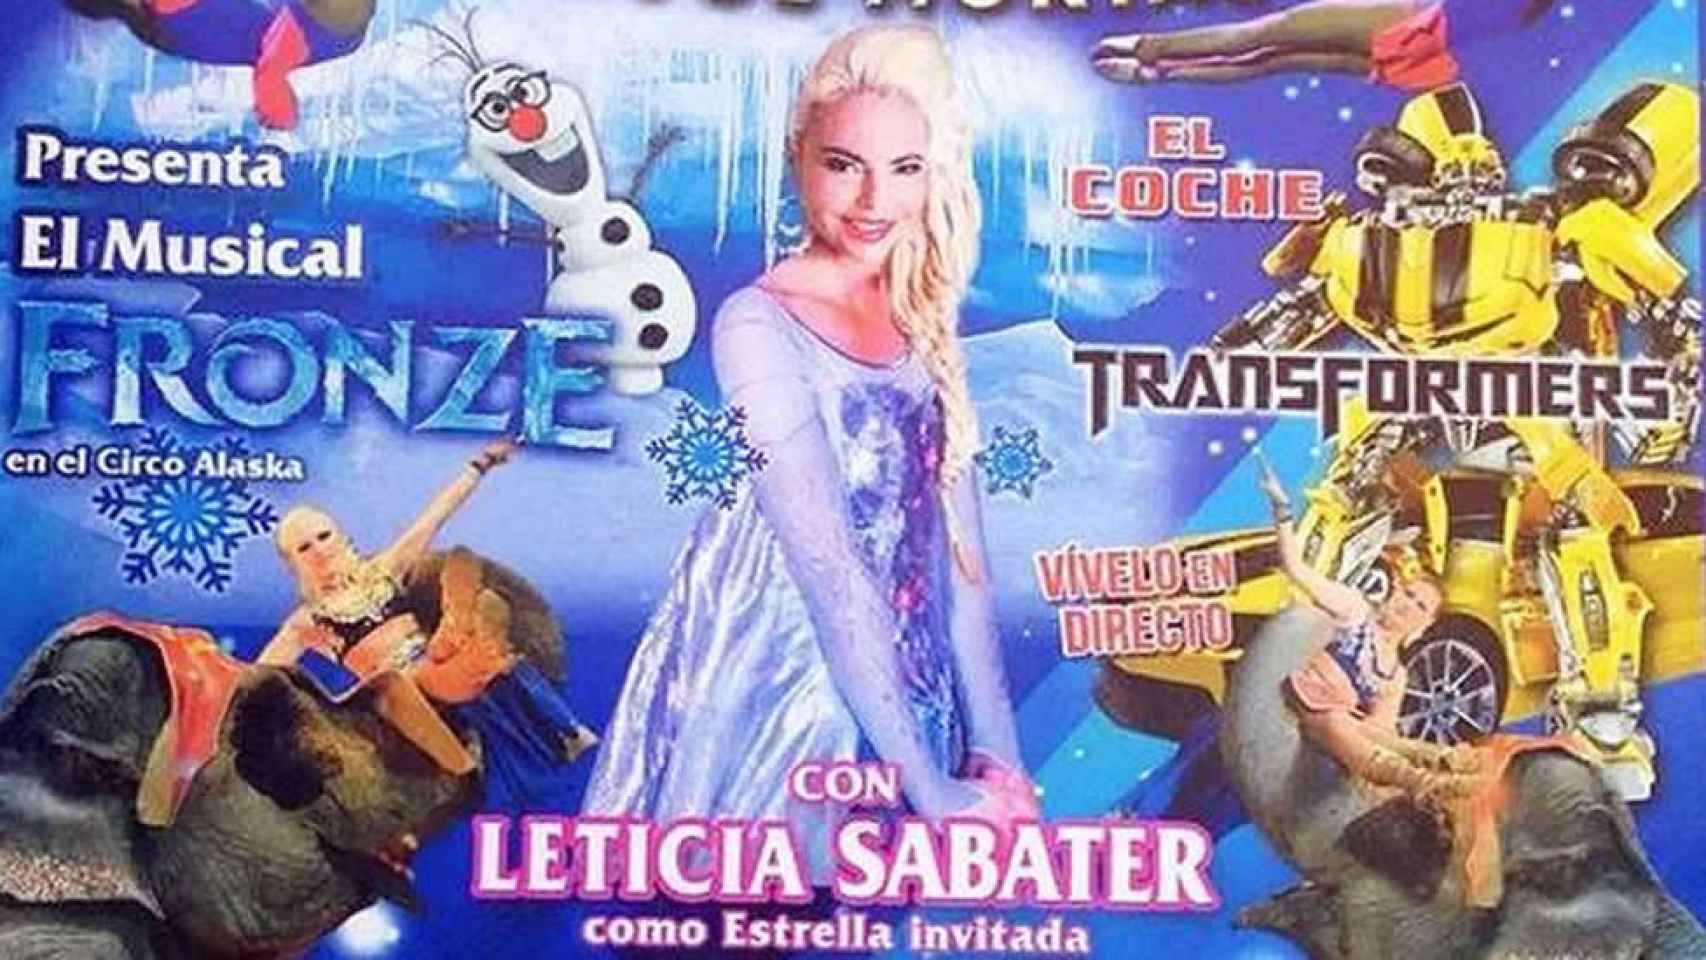 Leticia Sabater protagonista del show de Fronze en el Gran Circo de Alaska.